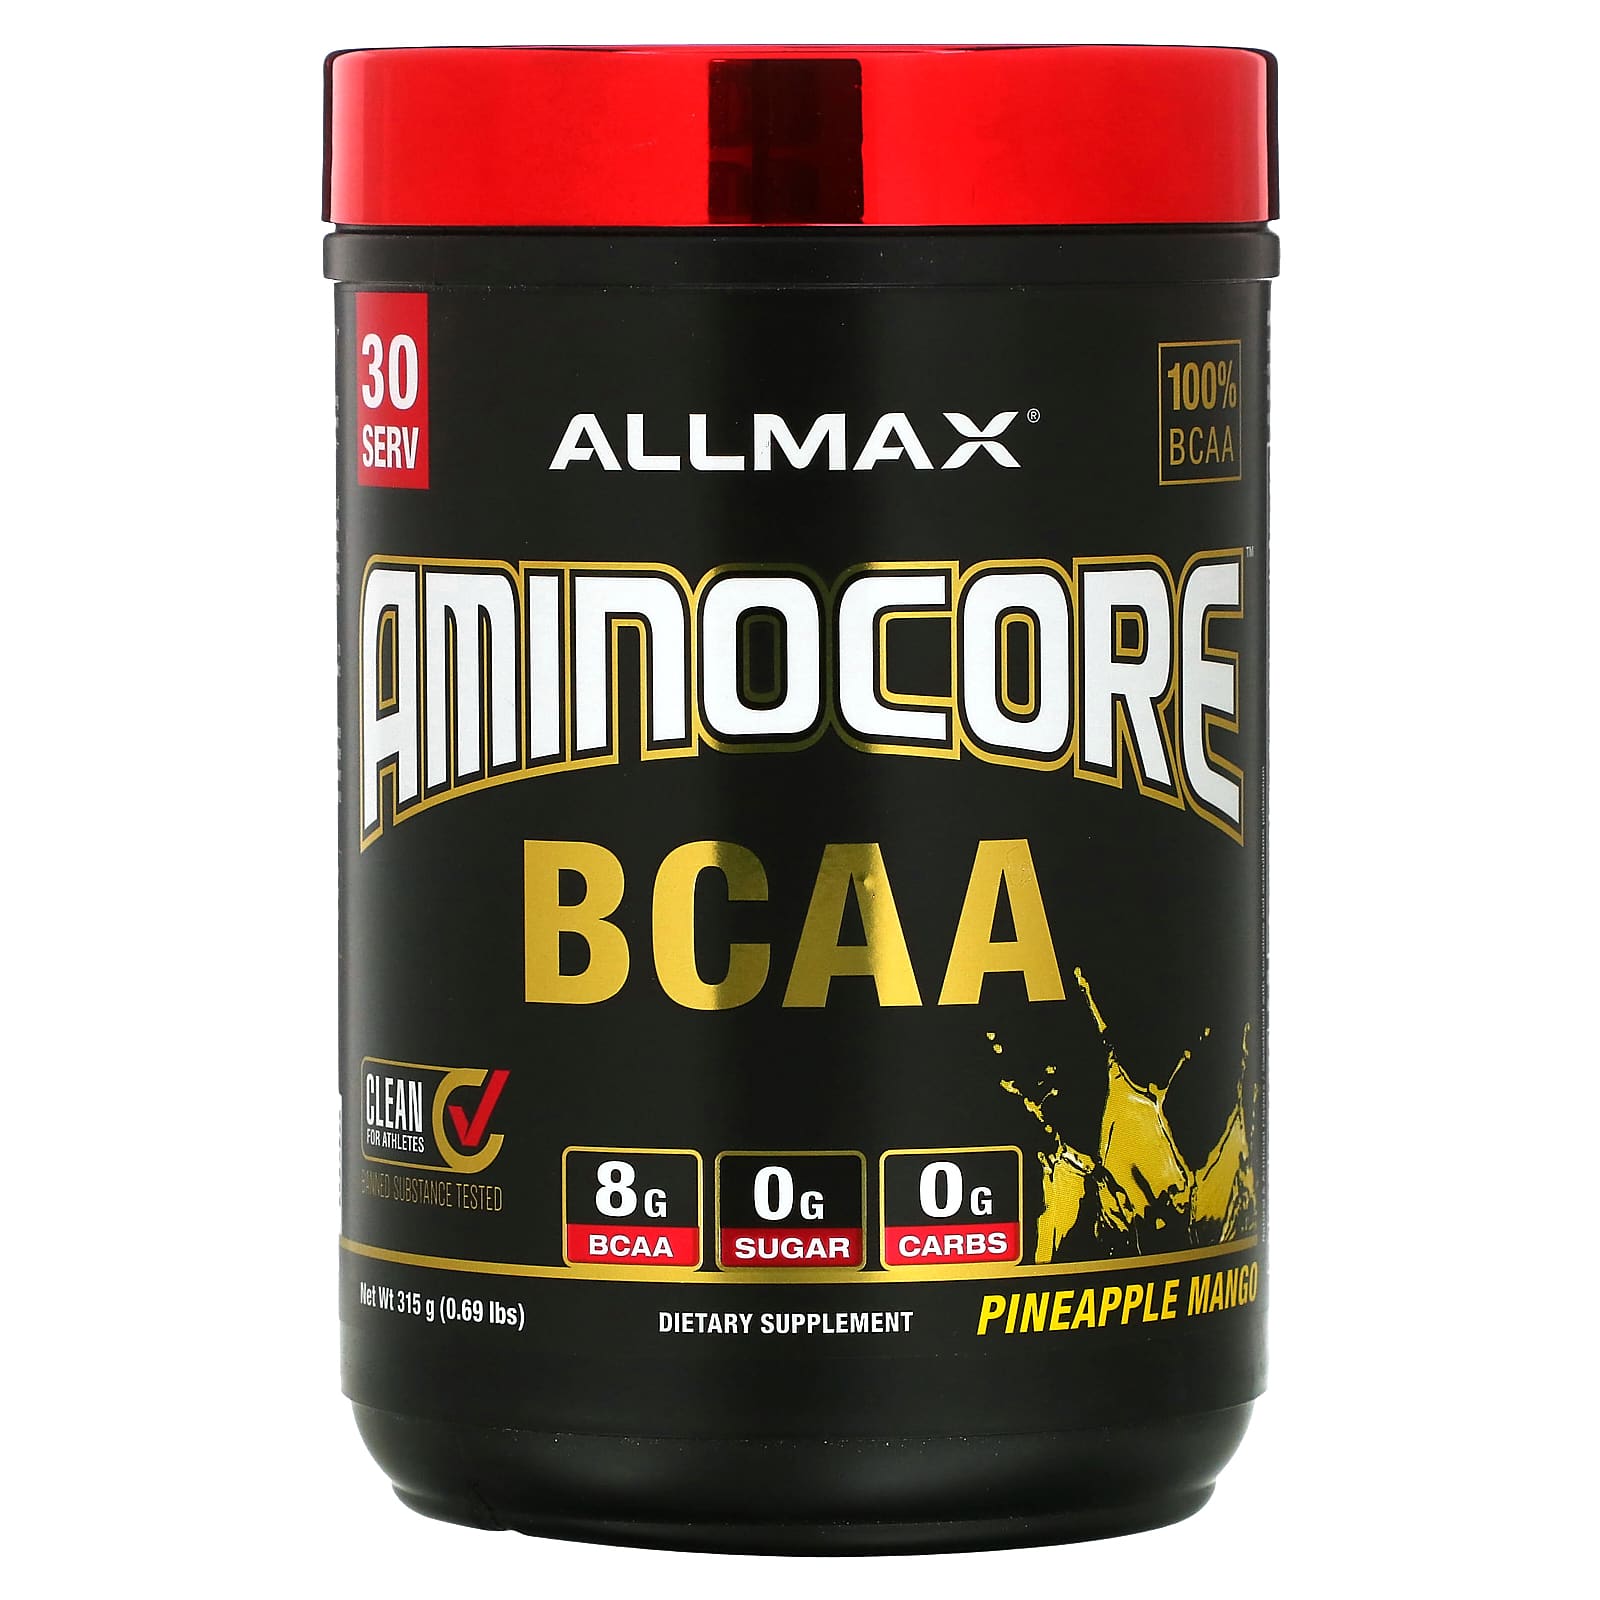 ALLMAX-AMINOCORE BCAA-Pineapple Mango-0.69 lb (315 g)